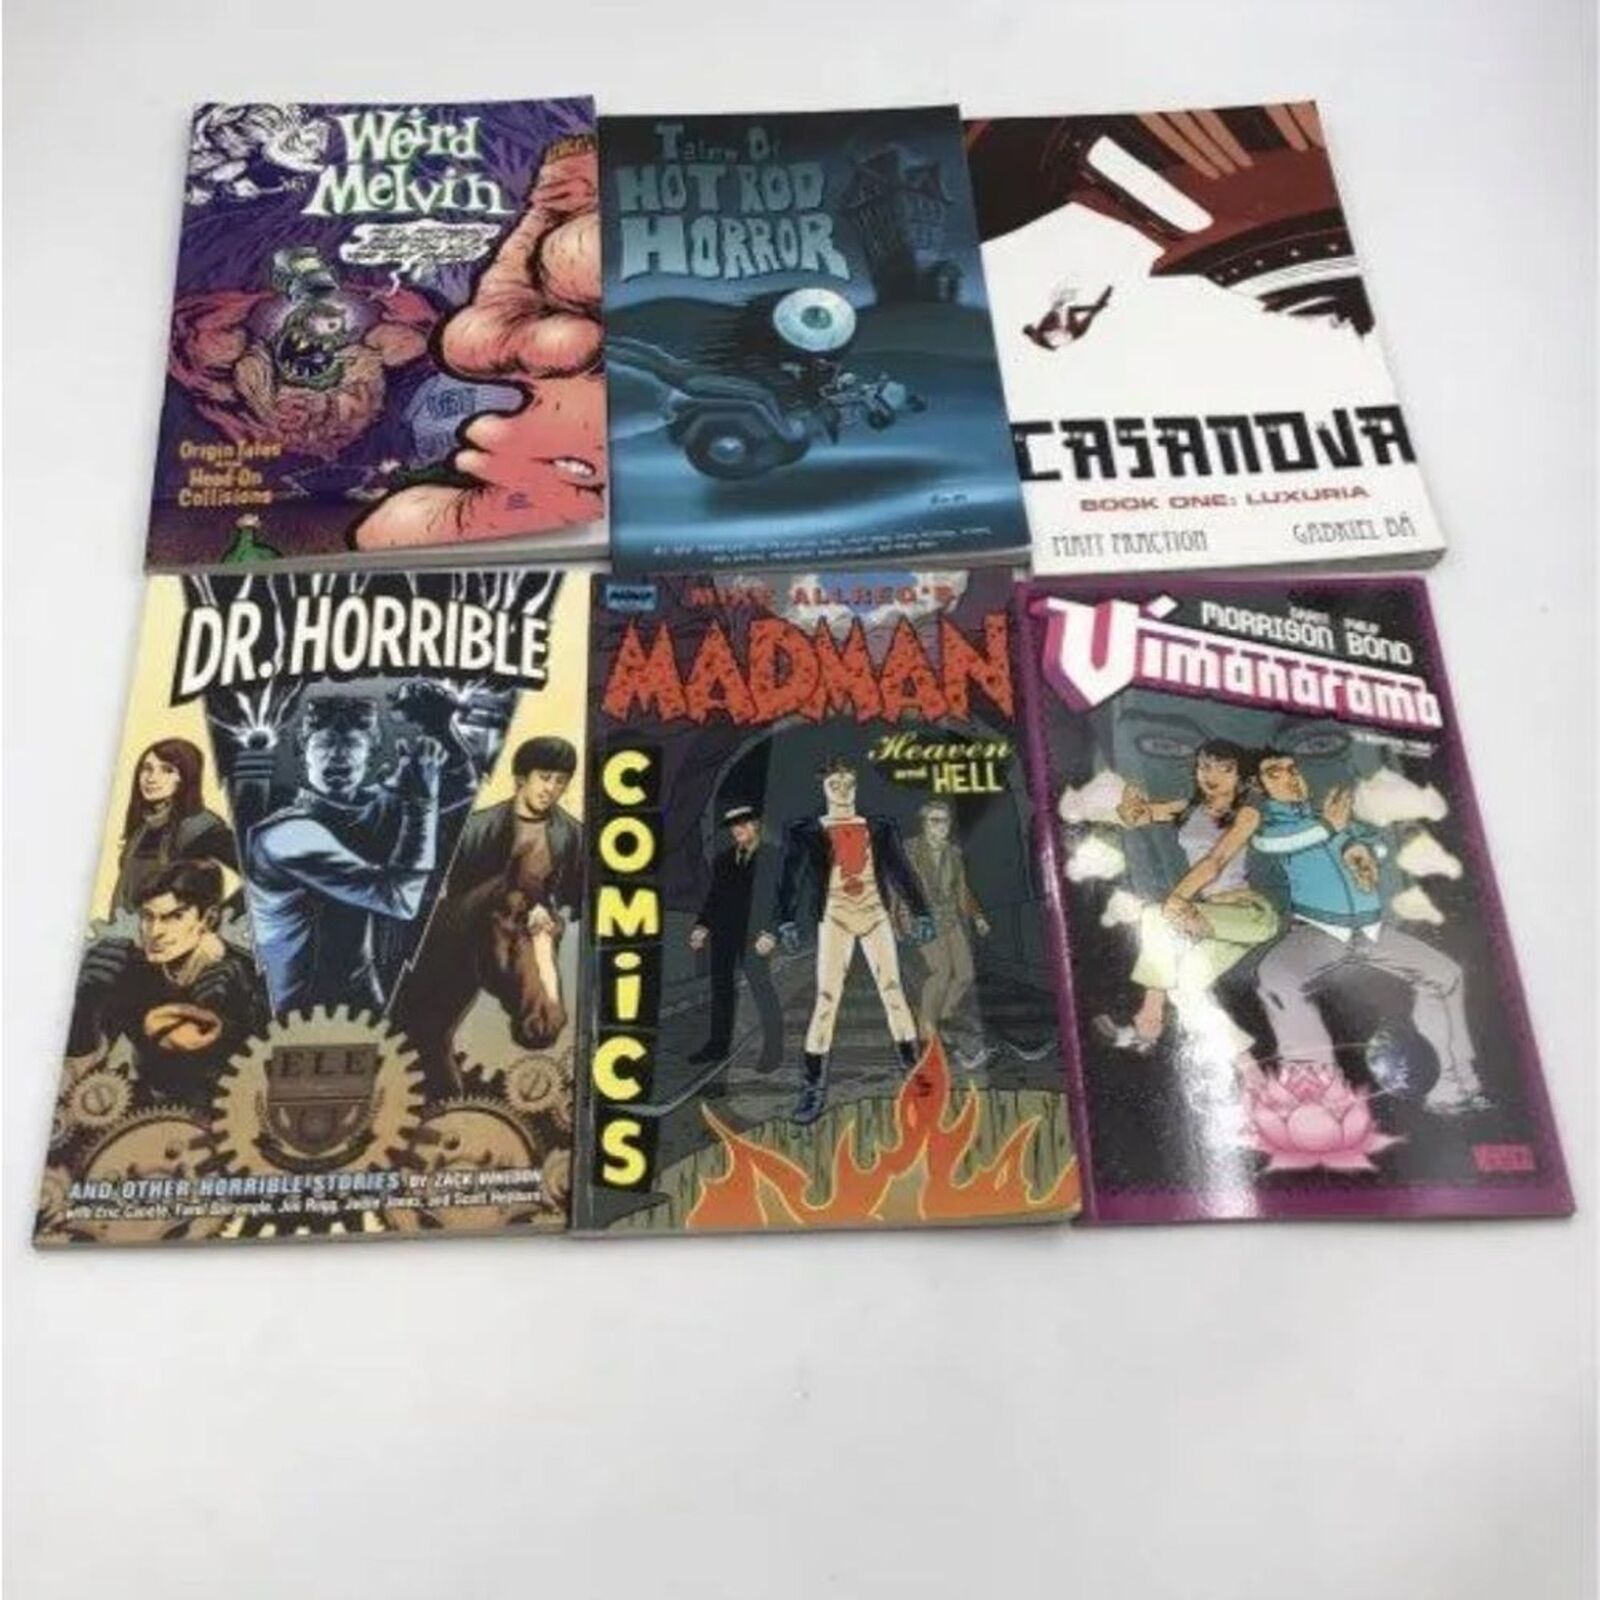 Vintage Vertigo Vimanarama Dr. Horrible Madman & Other Comic Books - Mixed Lot